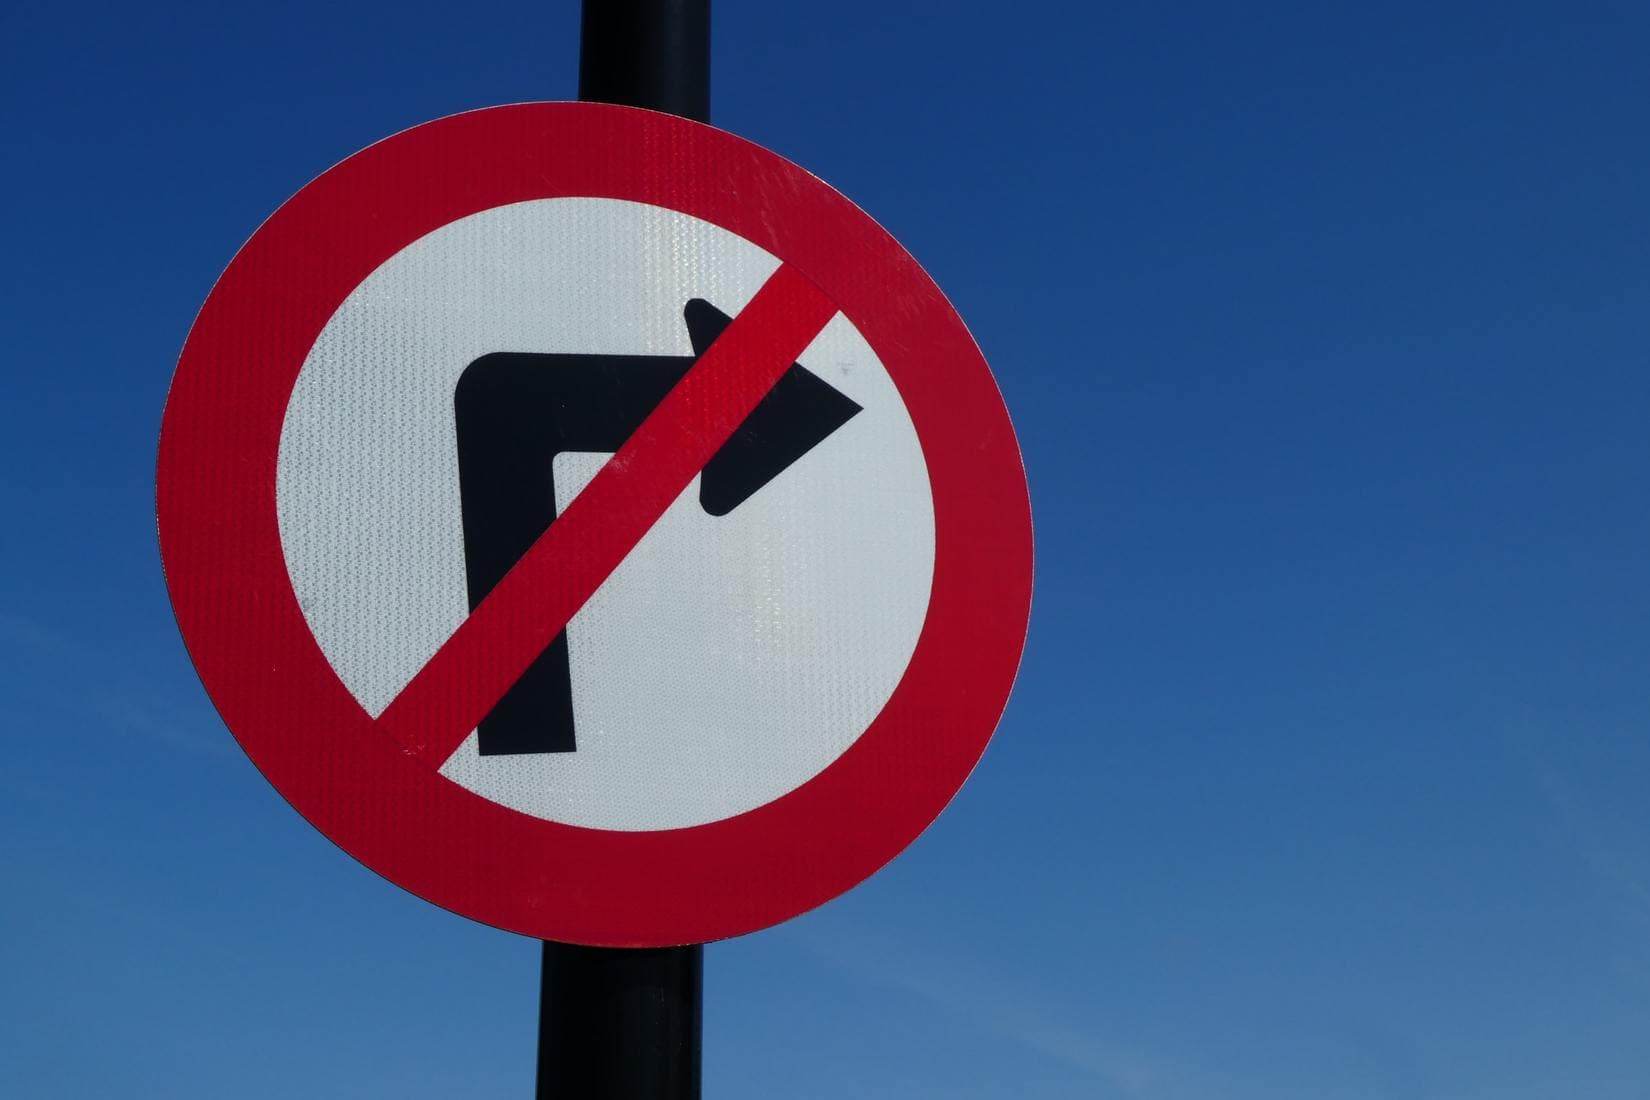 Forbidden turn sign